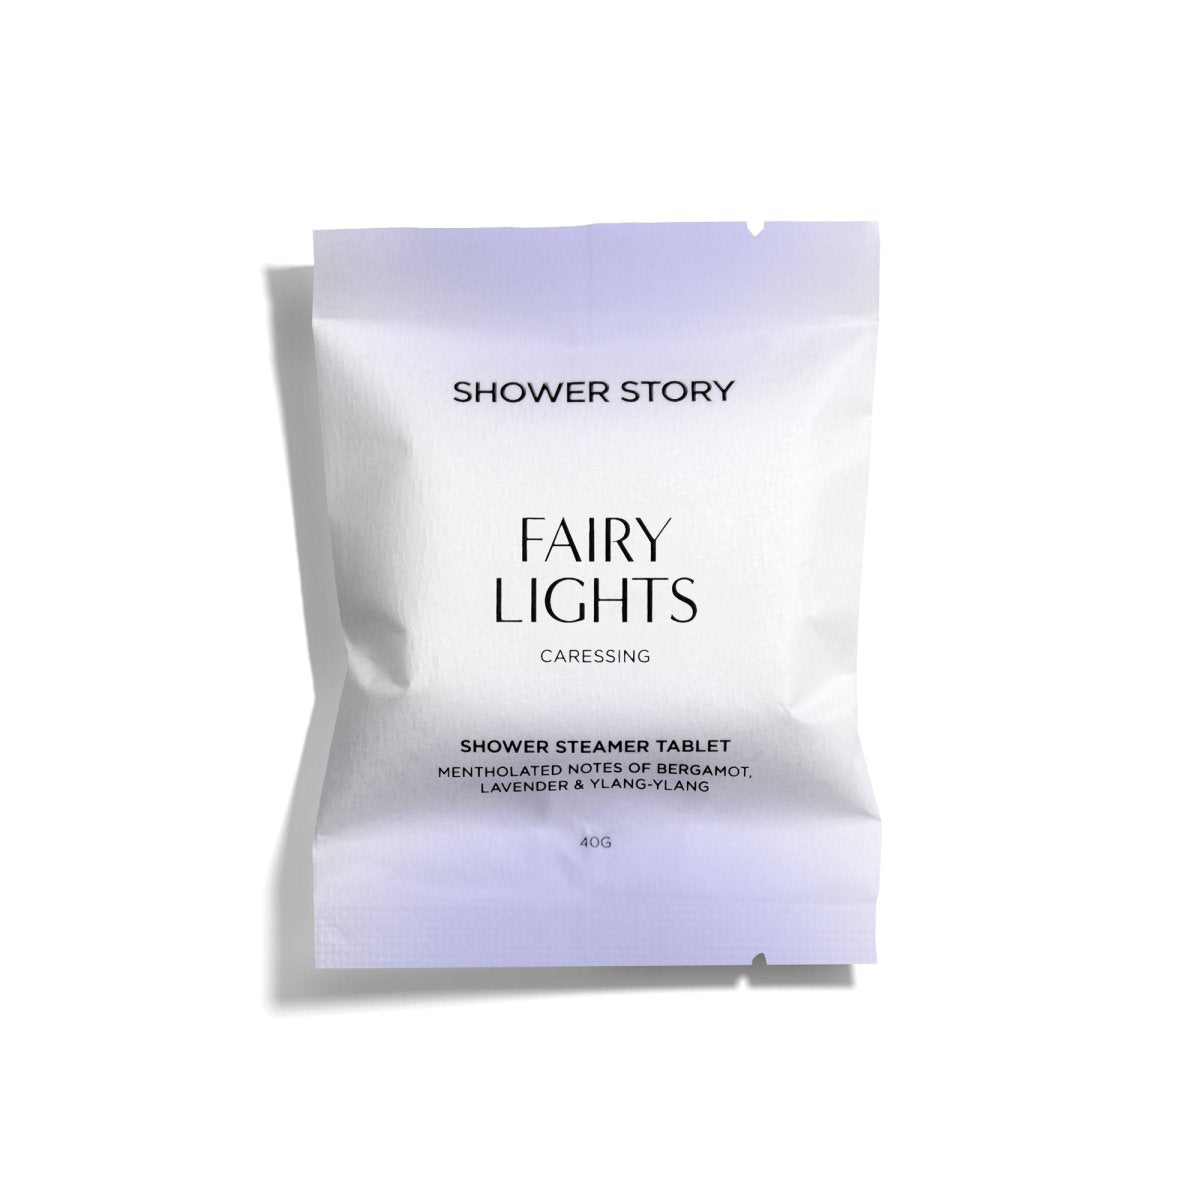 SHOWER STORY_[NEW] FAIRY LIGHTS – Caressing Shower Steamer Set (10 Tablets)_Shower Steamer Daily Set_SSFLDX10